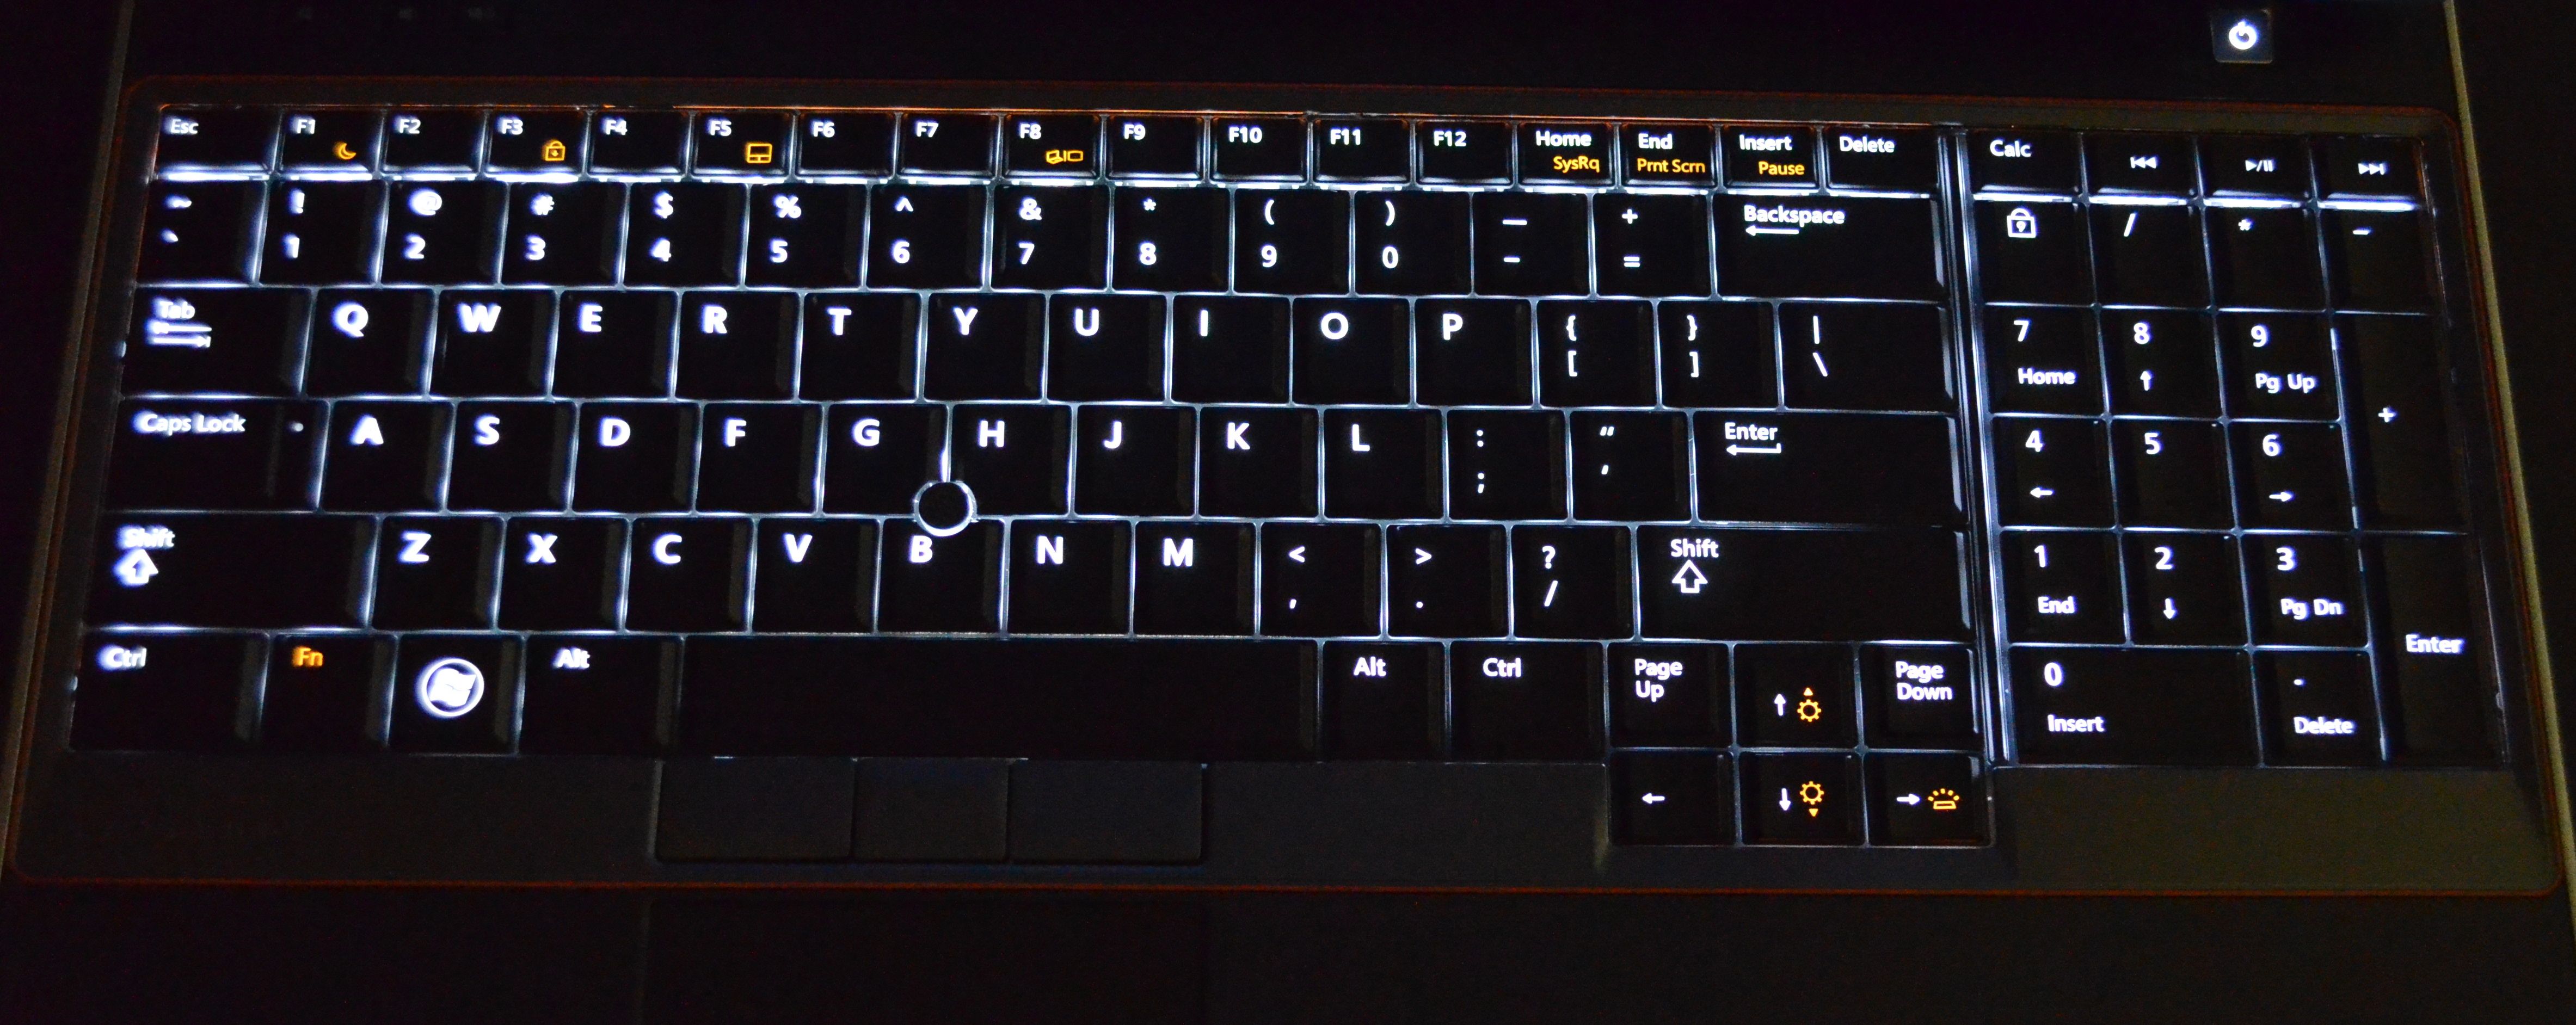 dell laptop backlit keyboard